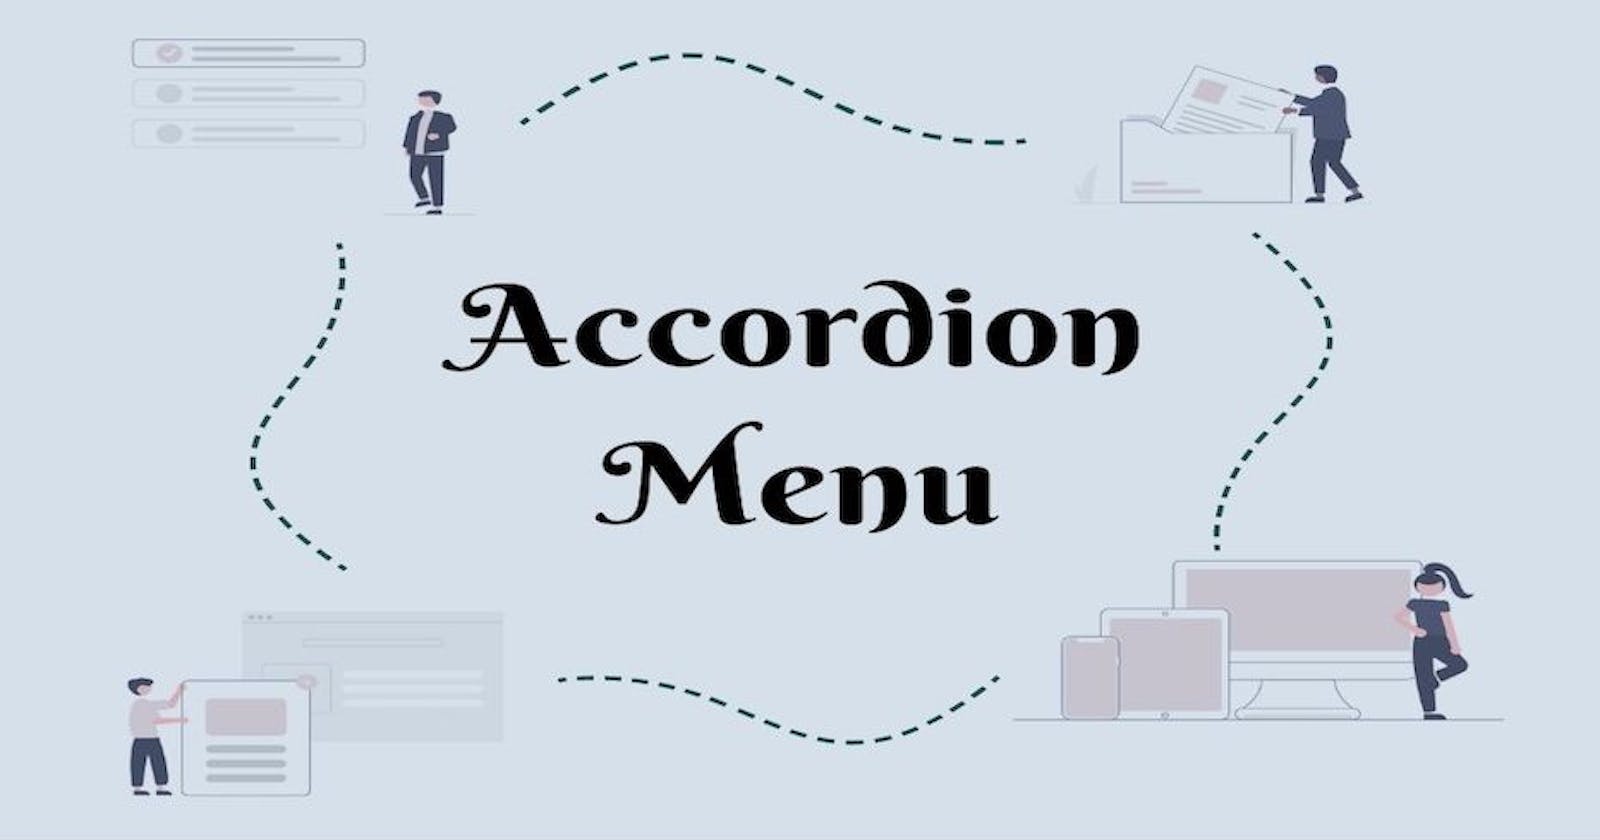 Building an Accordion Menu with JavaScript